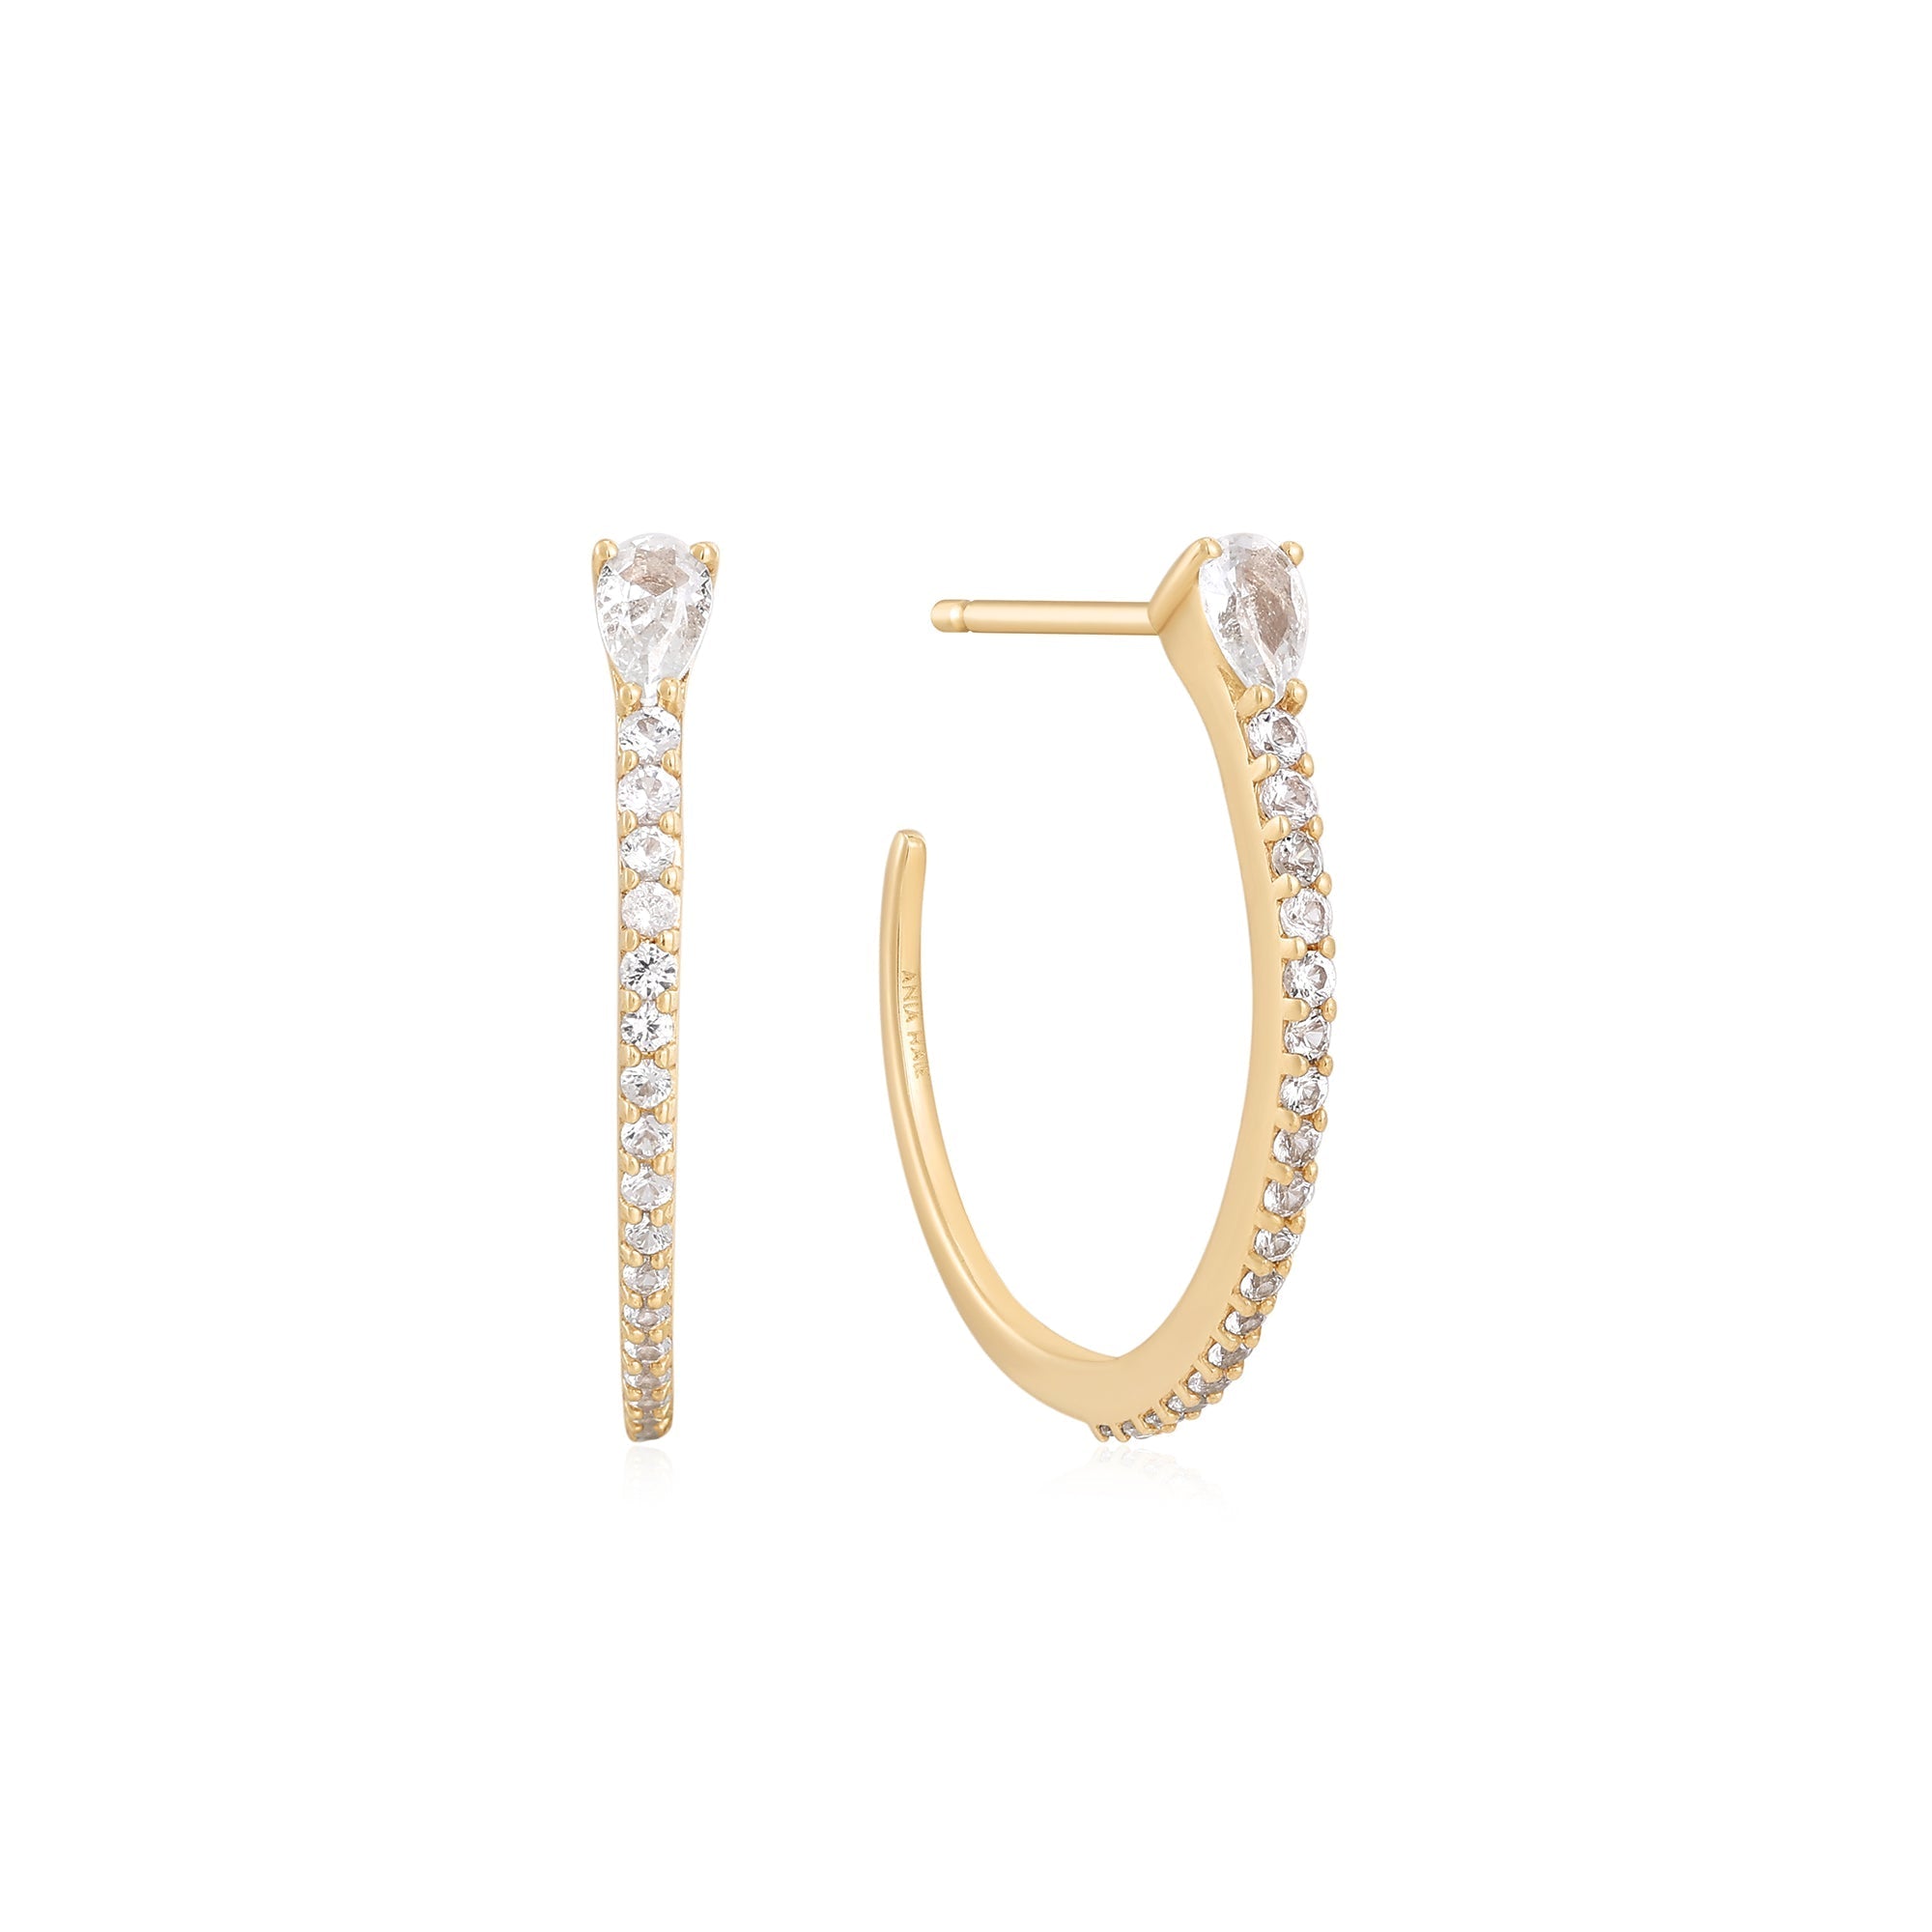 Ania Haie 14ct Gold White Sapphire Hoop Earrings